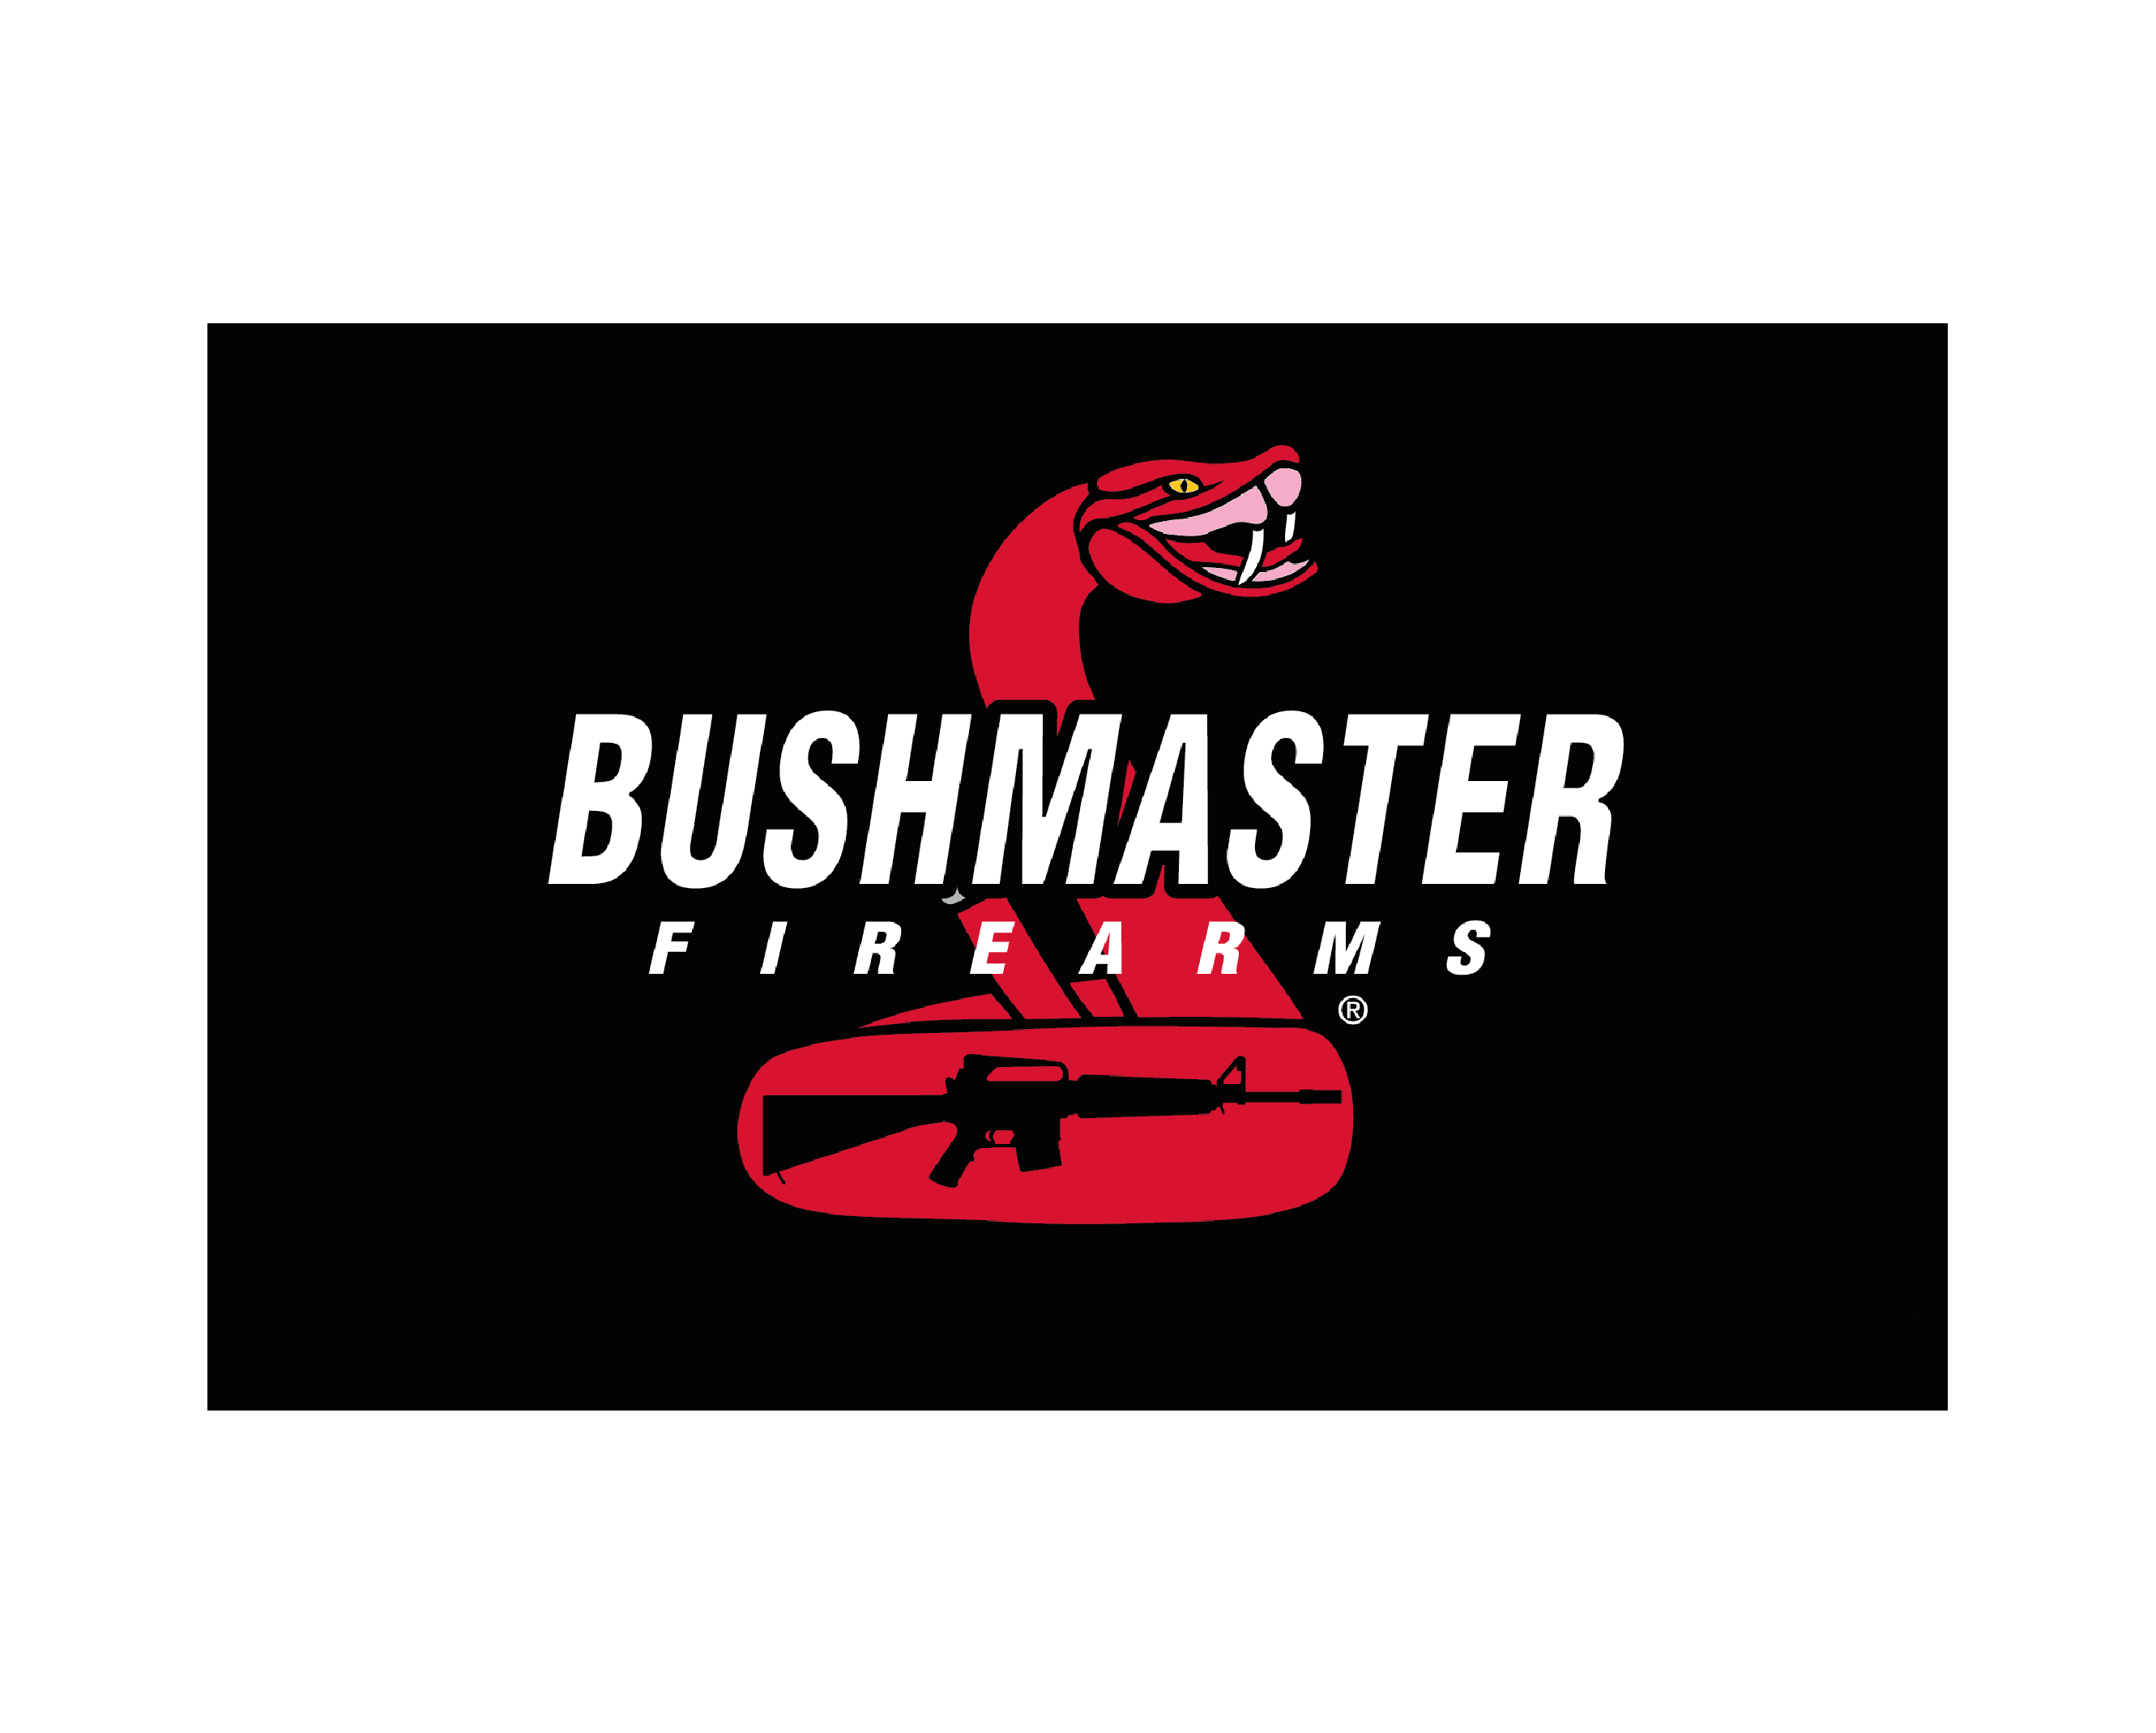 //centre-tir.ch/wp-content/uploads/2017/10/logo-bushmaster.png